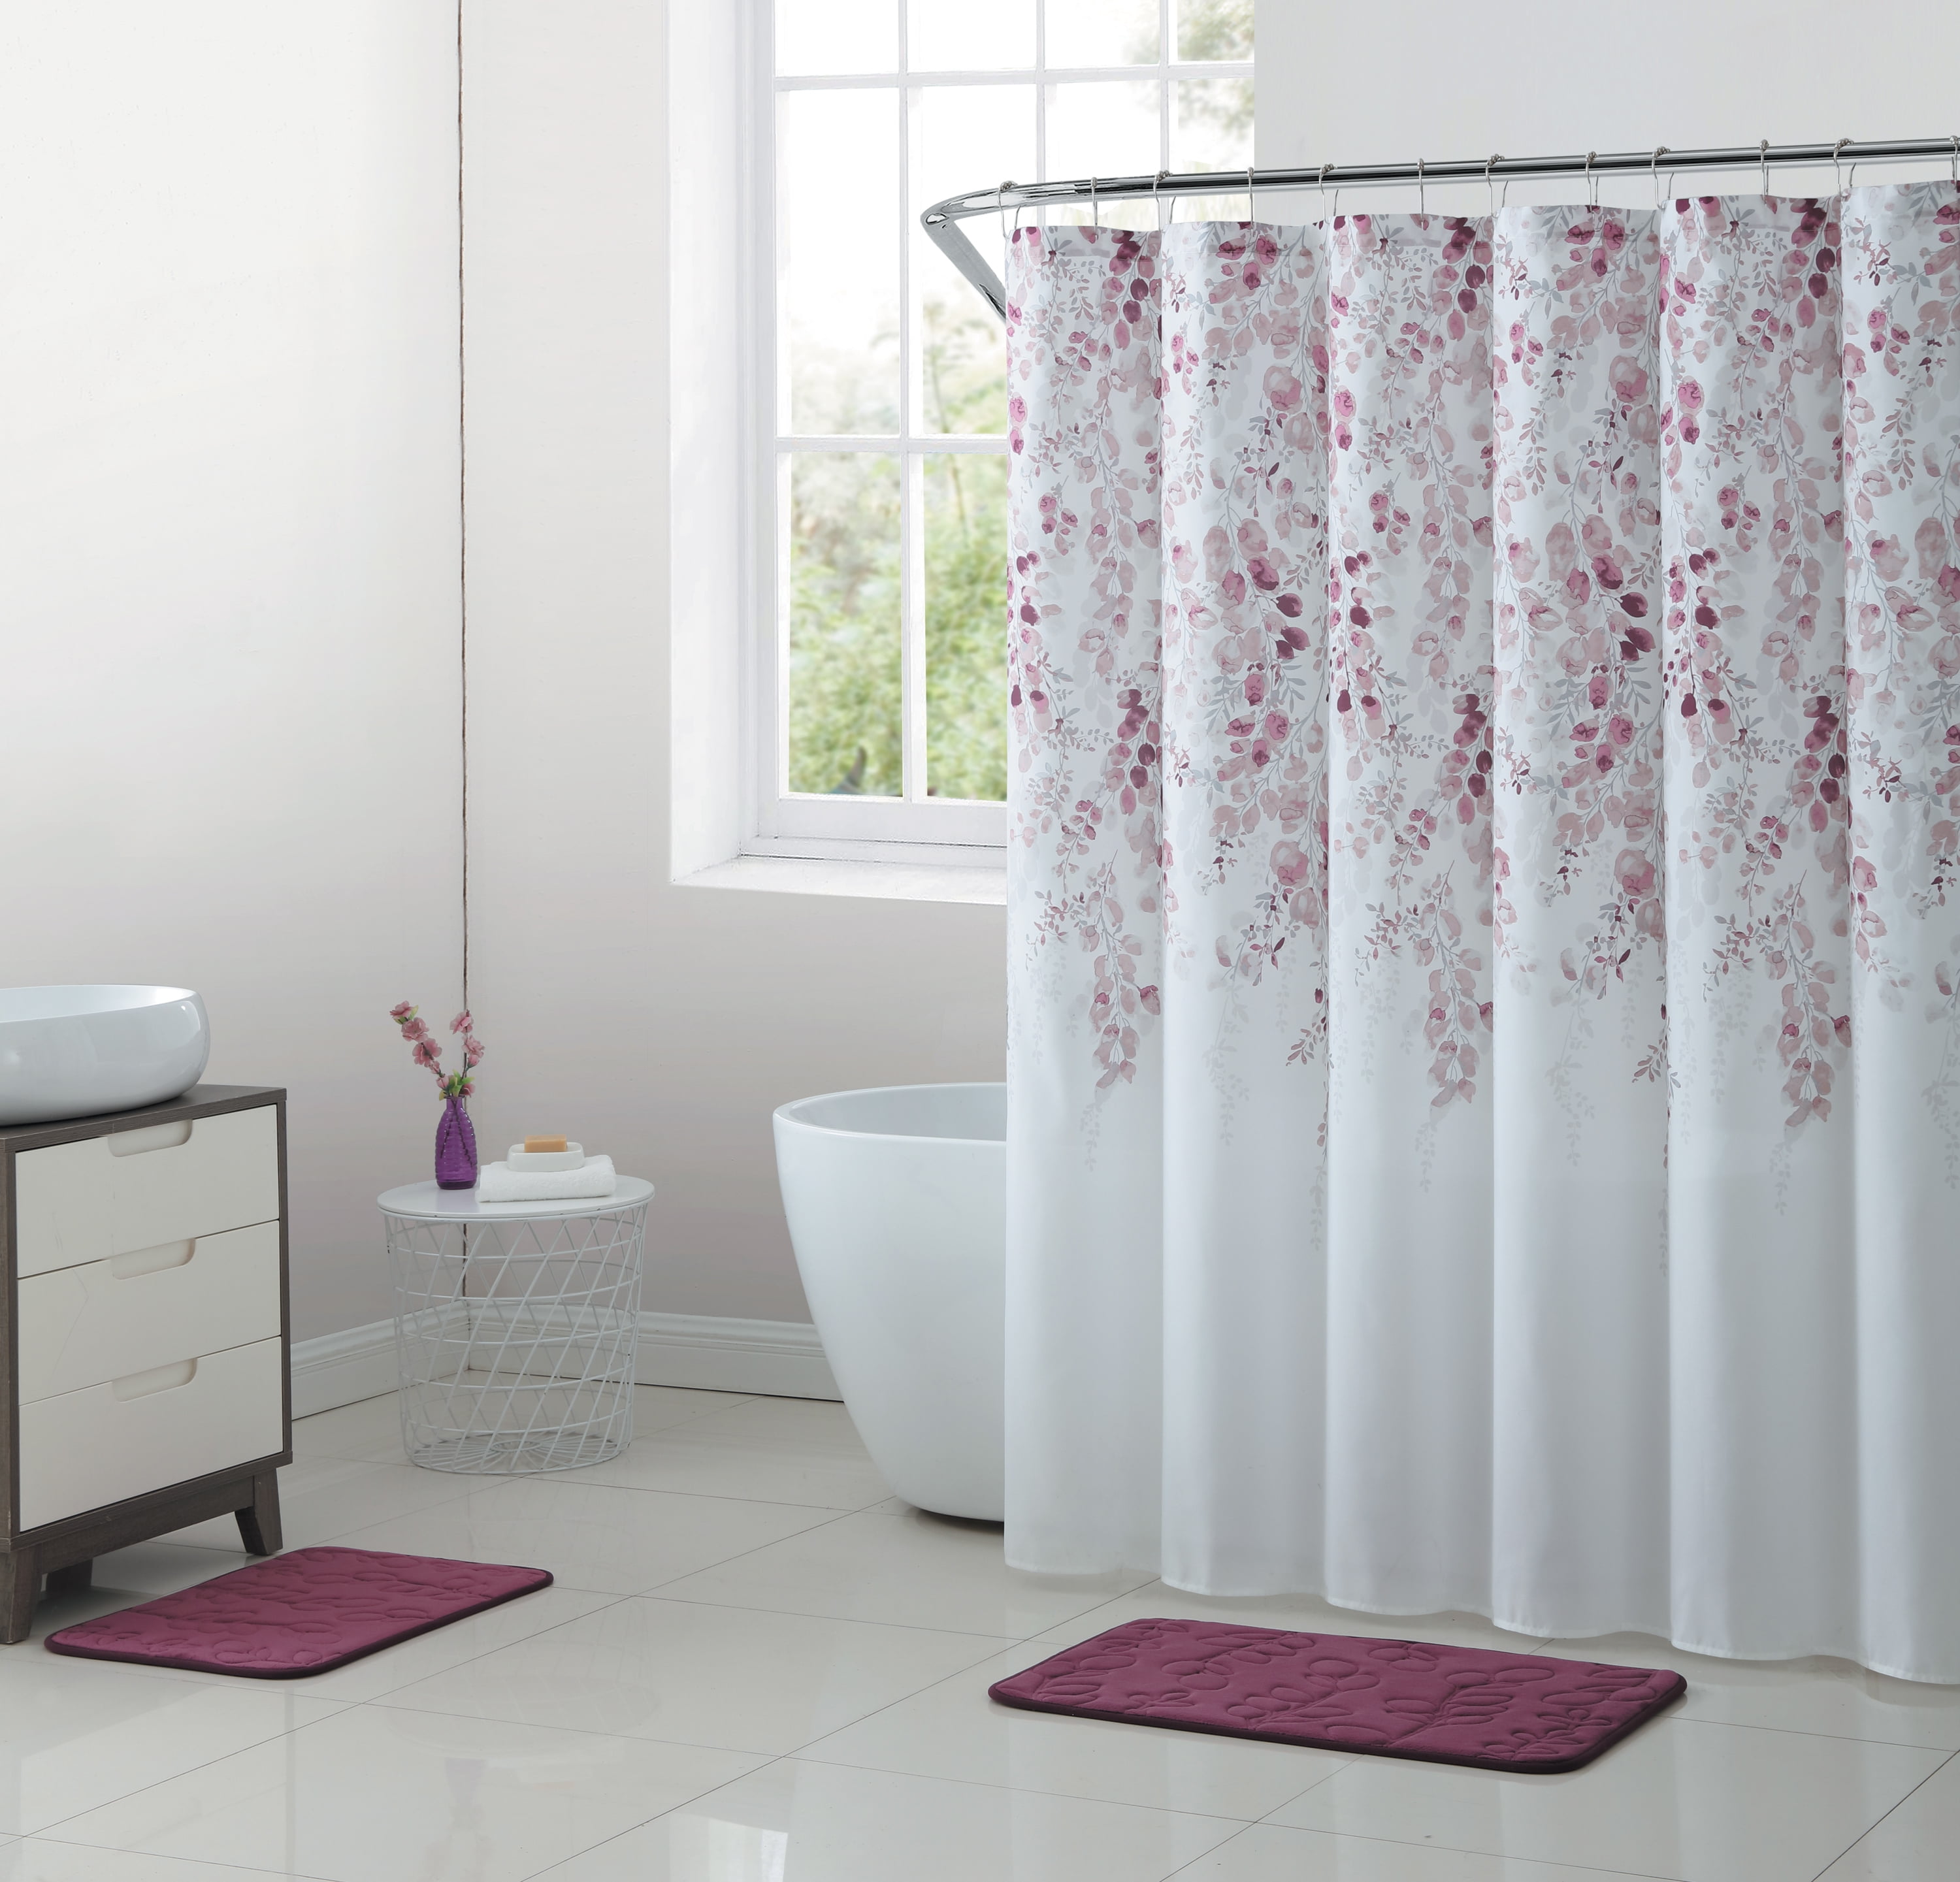 Details about   Dinosaur Shower Curtain With 12 Hooks Bath Mat Bathroom Toilet Cover Rug Set 